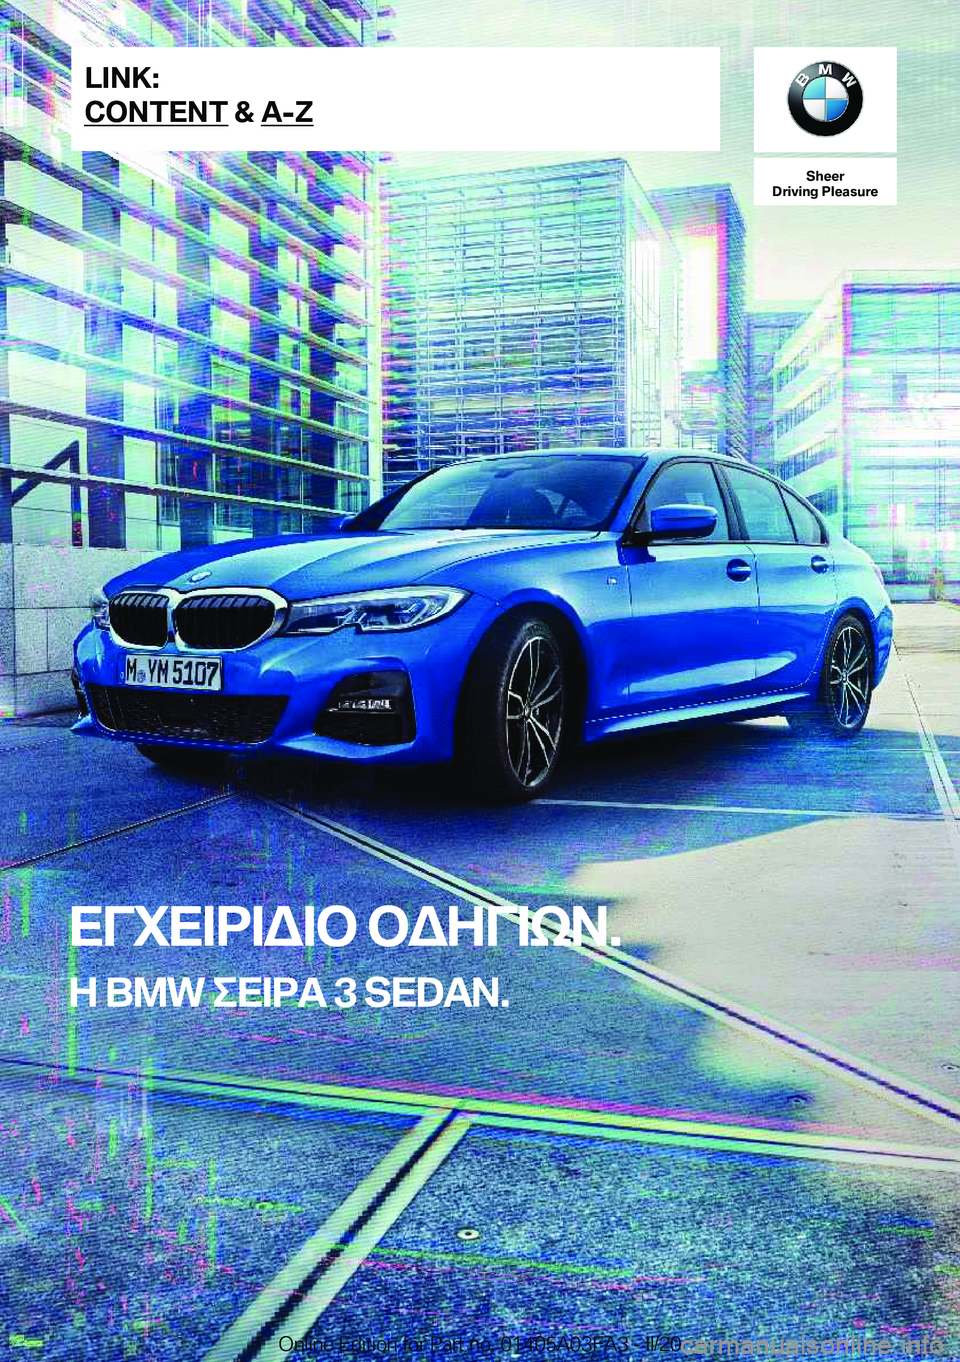 BMW 3 SERIES 2020  ΟΔΗΓΌΣ ΧΡΉΣΗΣ (in Greek) �S�h�e�e�r
�D�r�i�v�i�n�g��P�l�e�a�s�u�r�e
XViX=d=W=b�bWZV=kA�.
�H��B�M�W�eX=dT��3��S�E�D�A�N�.�L�I�N�K�:
�C�O�N�T�E�N�T��&��A�-�Z�O�n�l�i�n�e��E�d�i�t�i�o�n��f�o�r��P